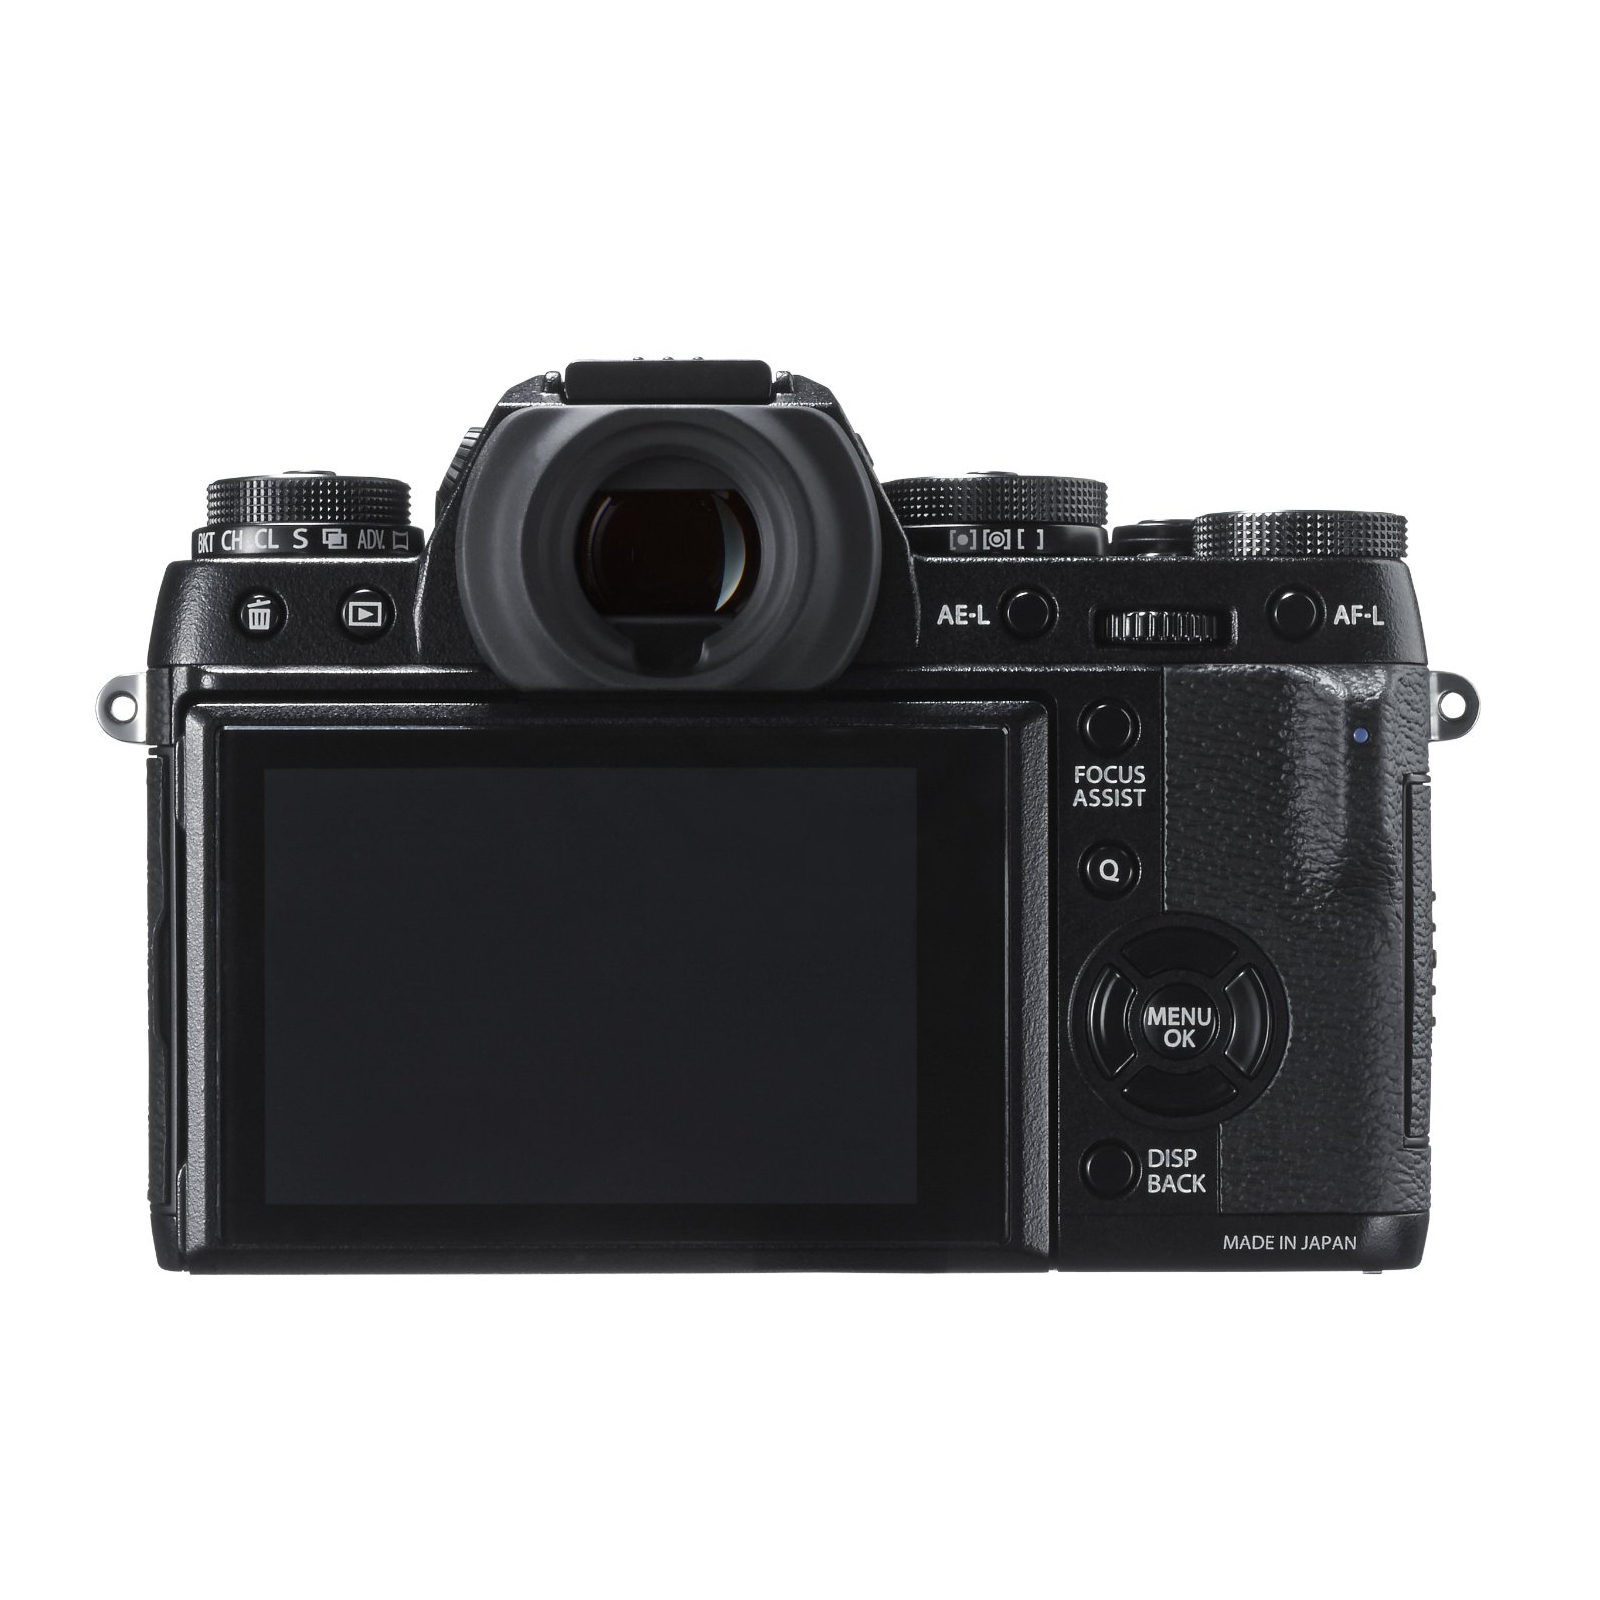 Цифровой фотоаппарат Fujifilm X-T1 XF 18-135 Black Kit (16432815) изображение 5